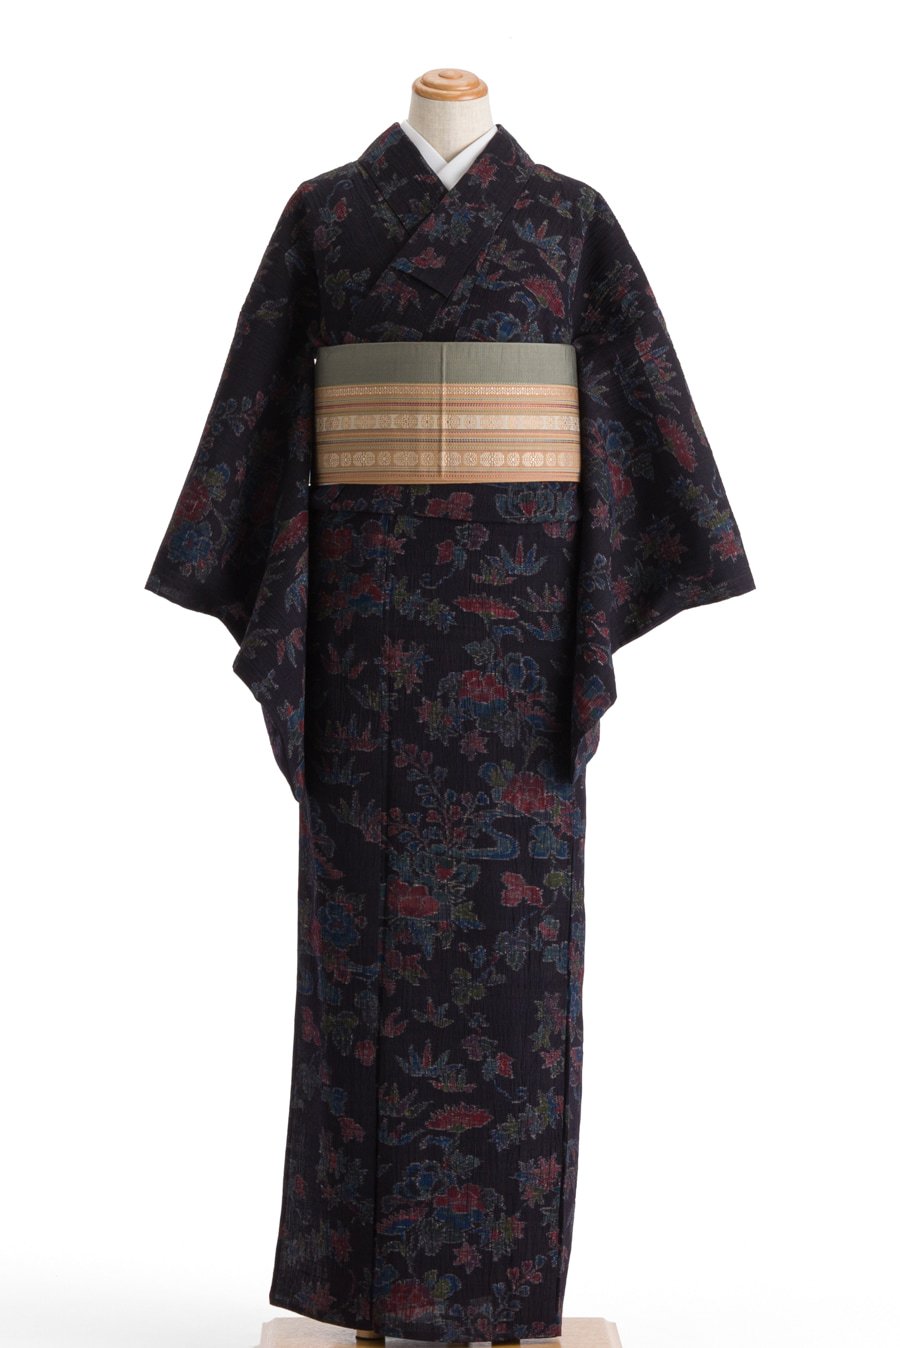 K-2404 単衣 紬着物 加津美絹紬 趣味の手織 京極生壁色 しつけ糸の+